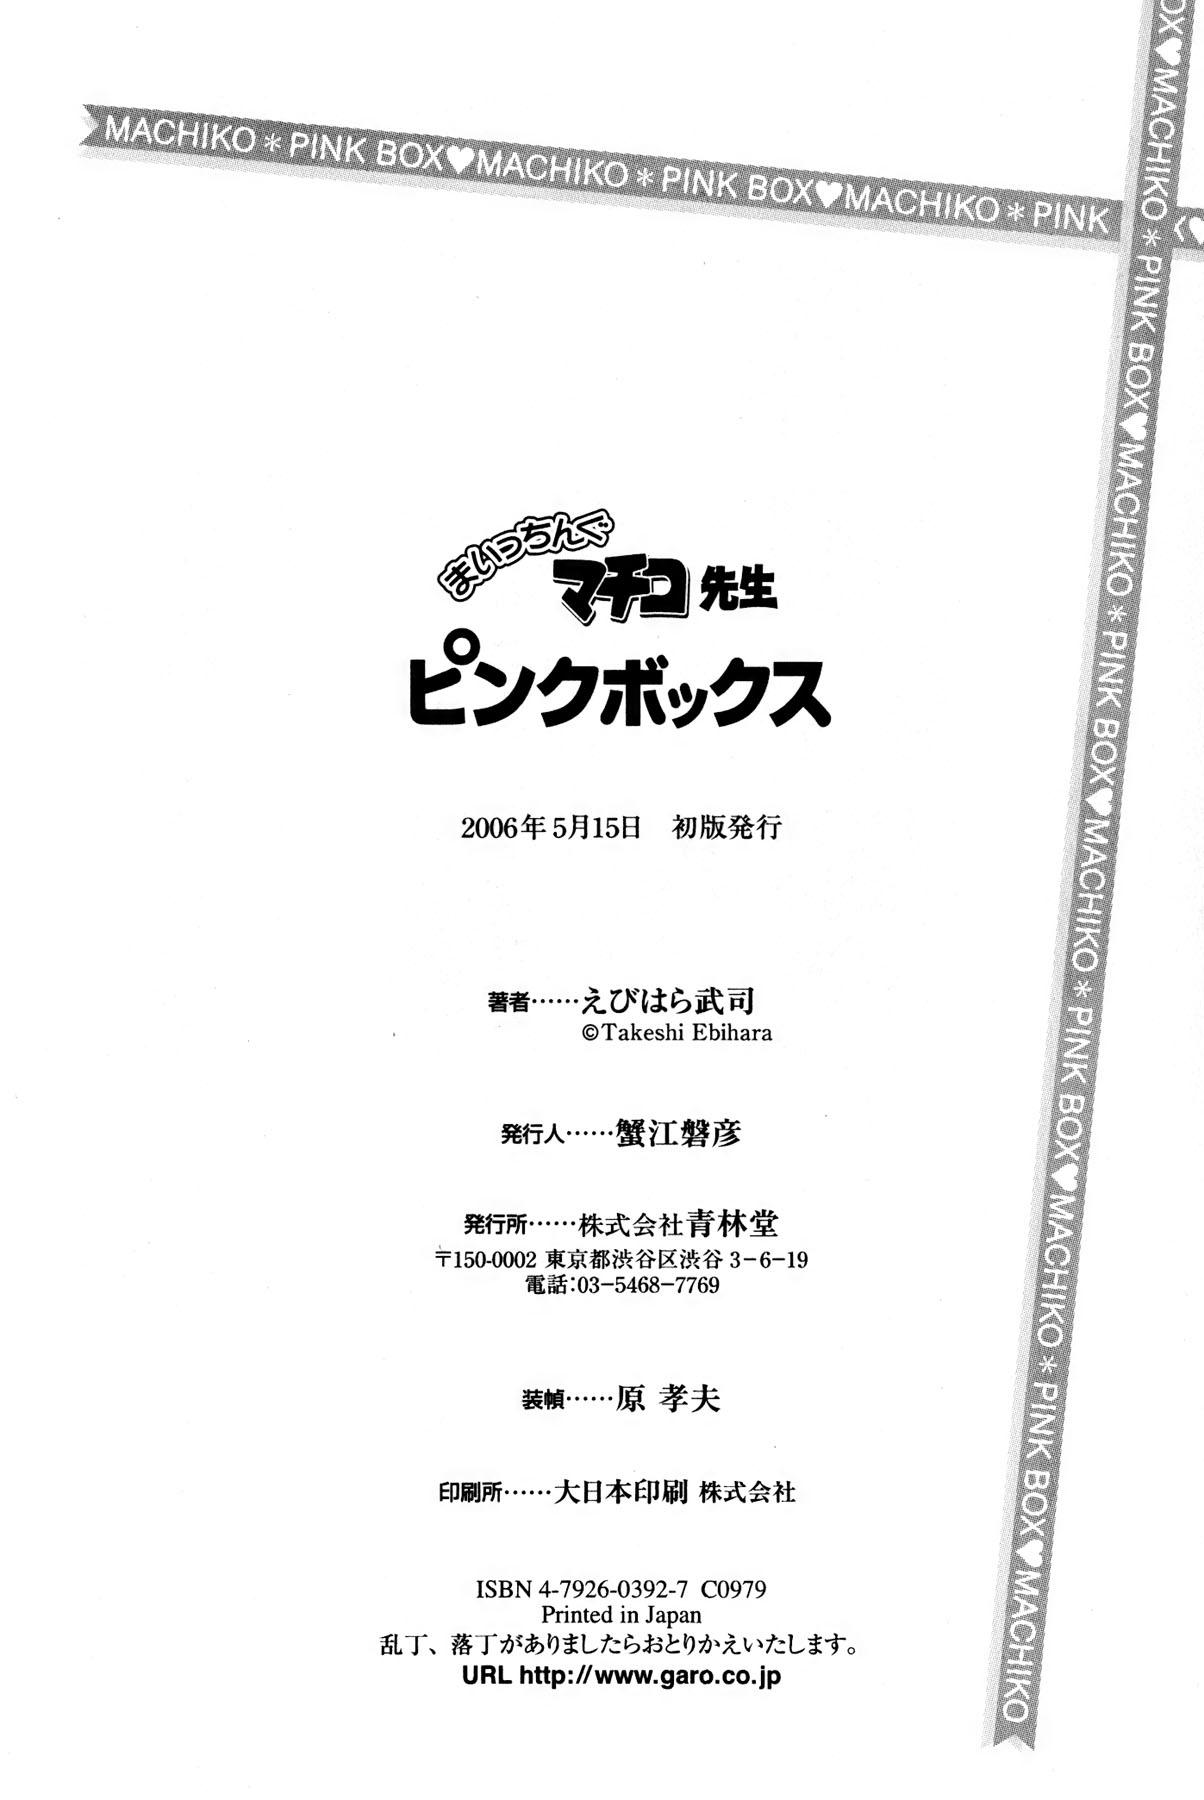 Maichiingu Machiko Sensei book pink 227